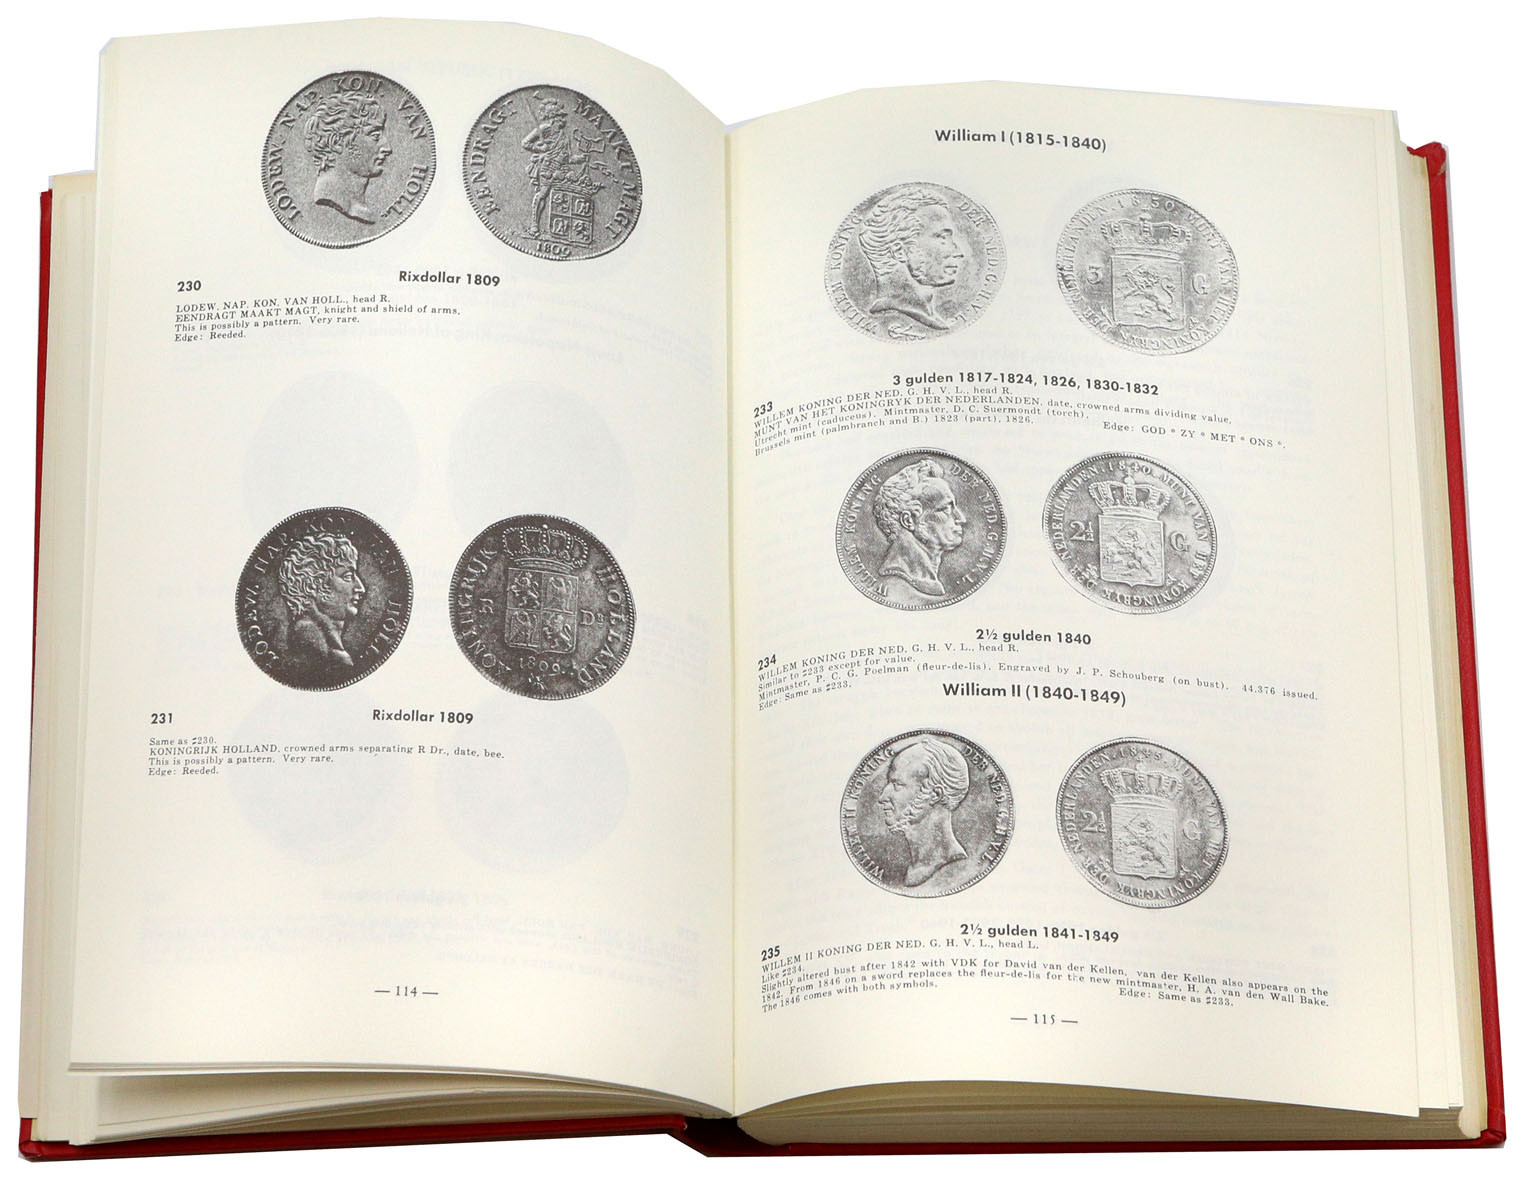 Katalog John S. Davenport - European Crowns and Talers since 1800, London 1964